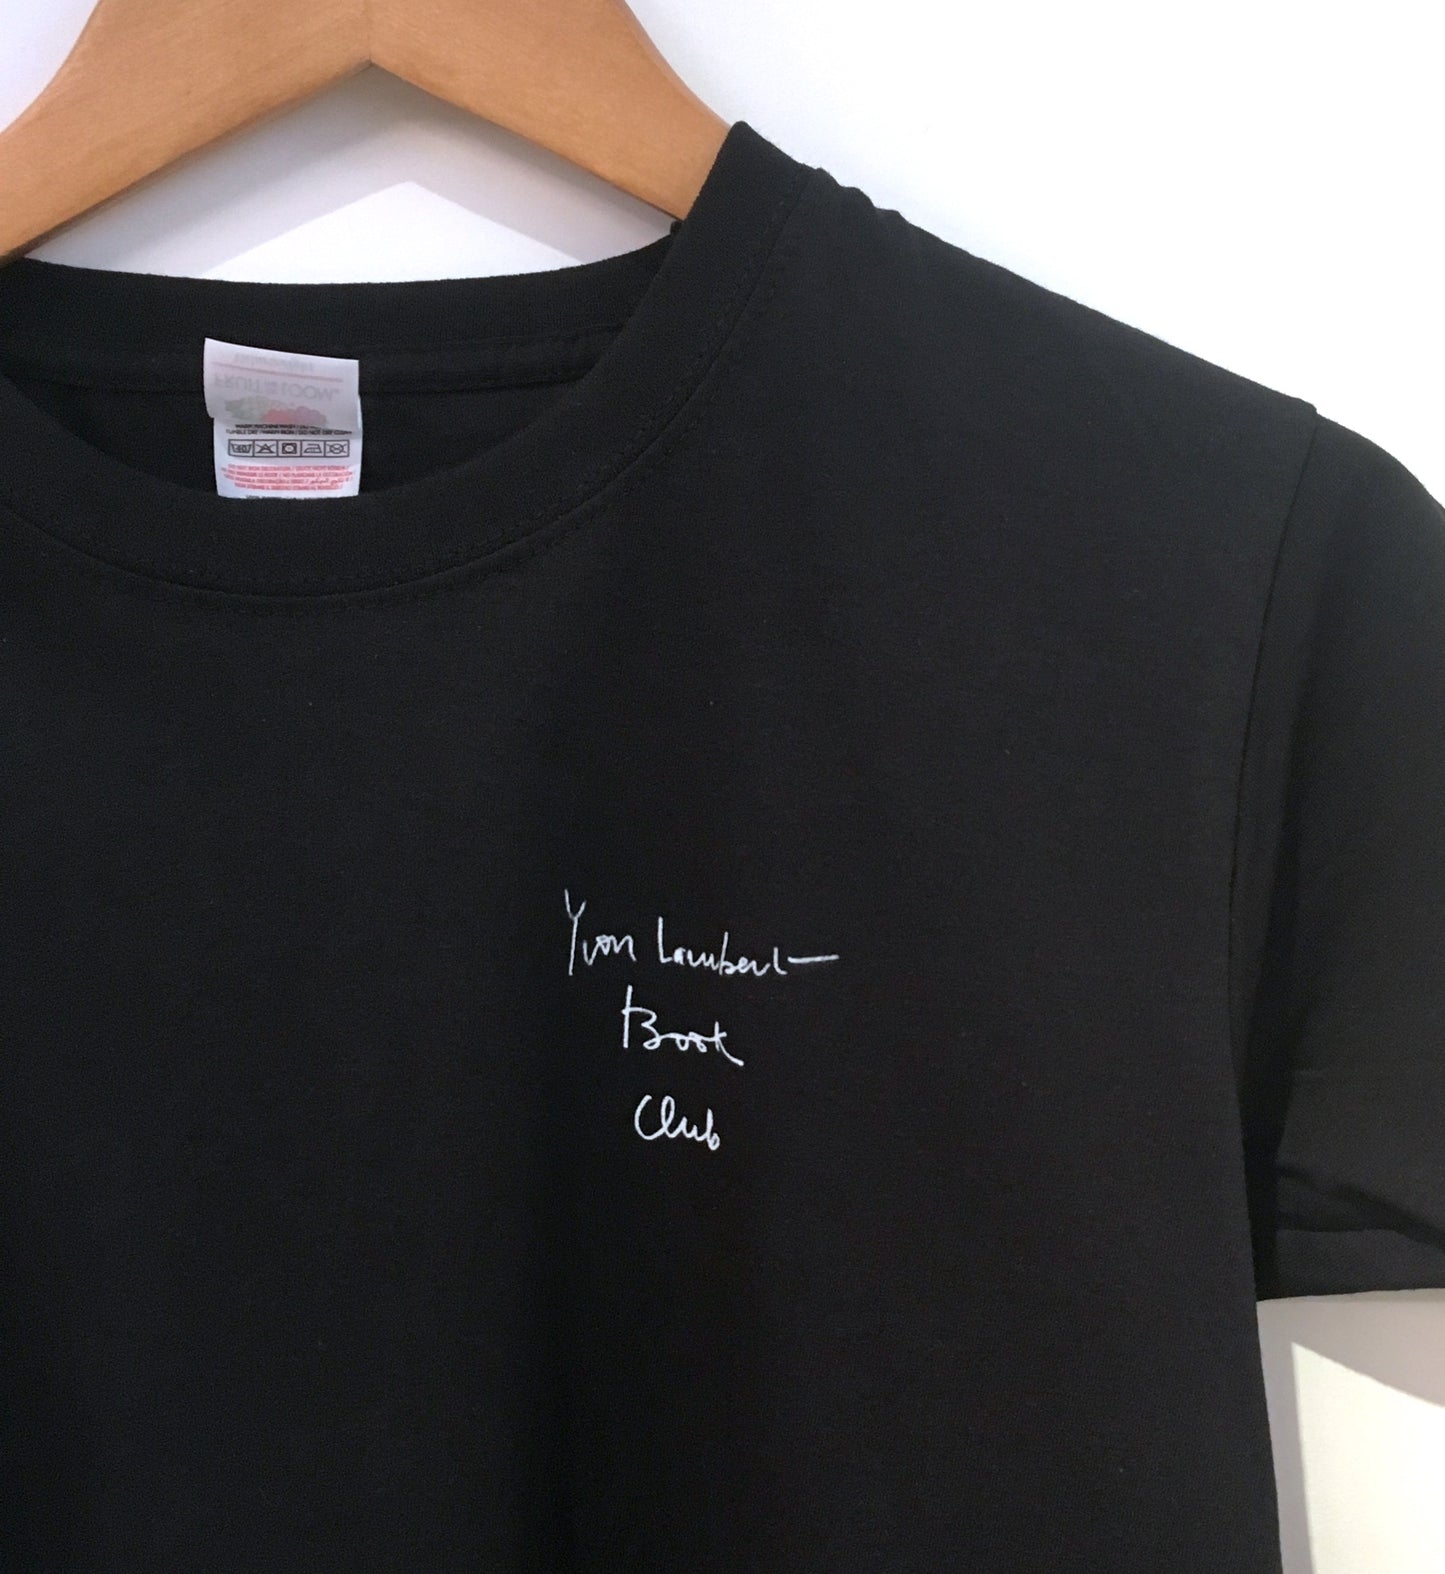 Yvon Lambert Book Club t-shirt (black)